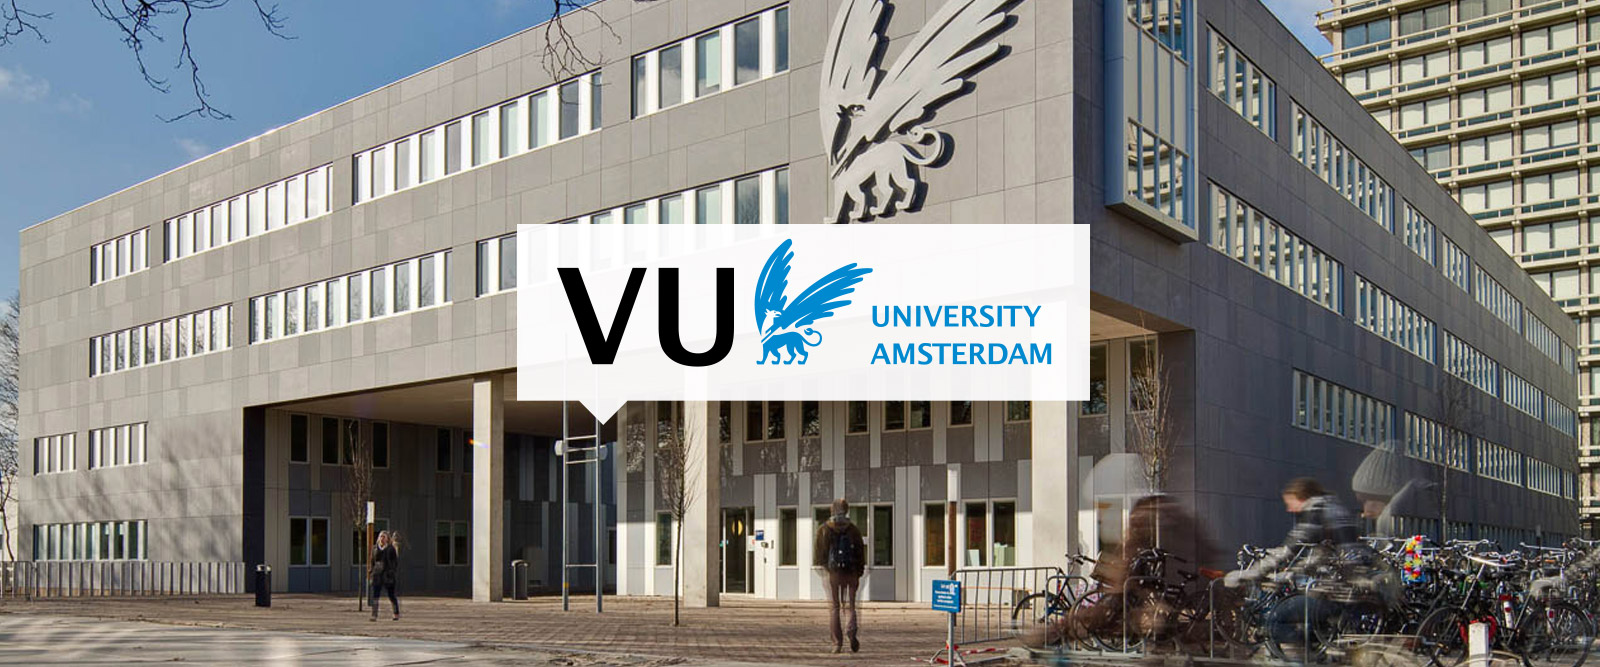 Giới thiệu trường Đại học Vrije (Vrije Universiteit Amsterdam)